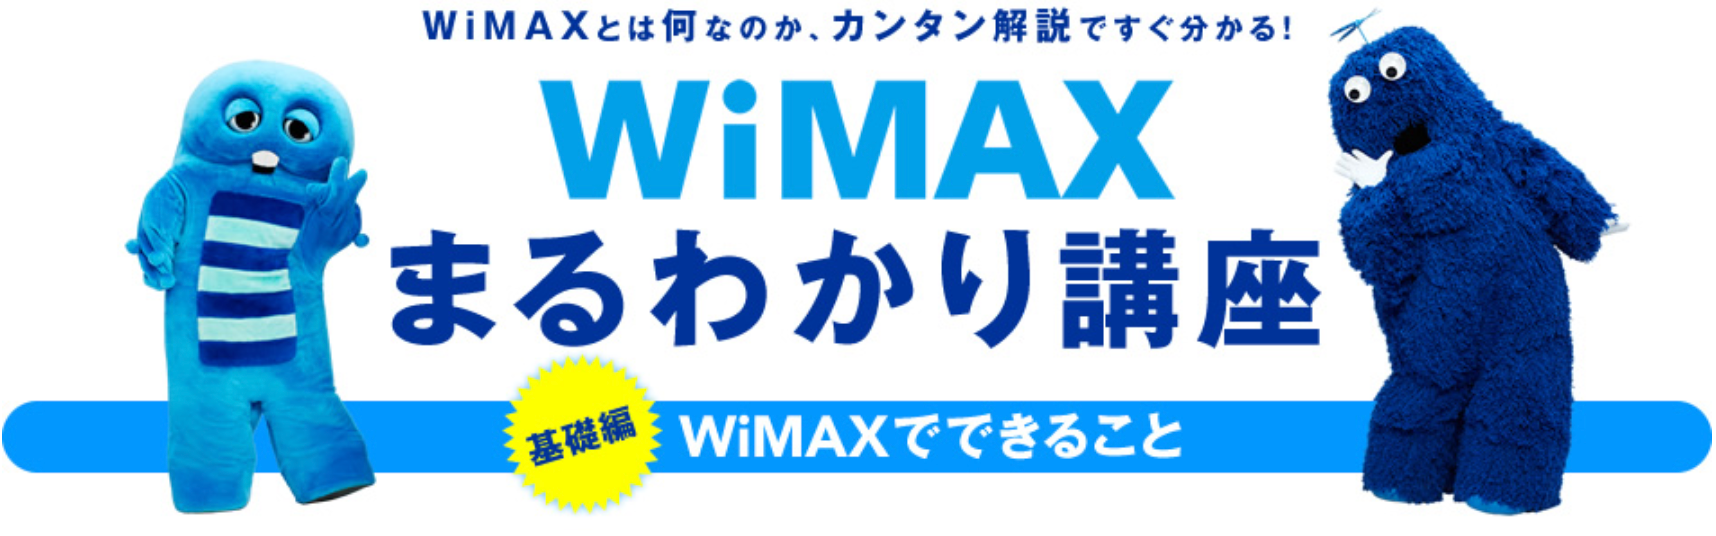 wimaxとは